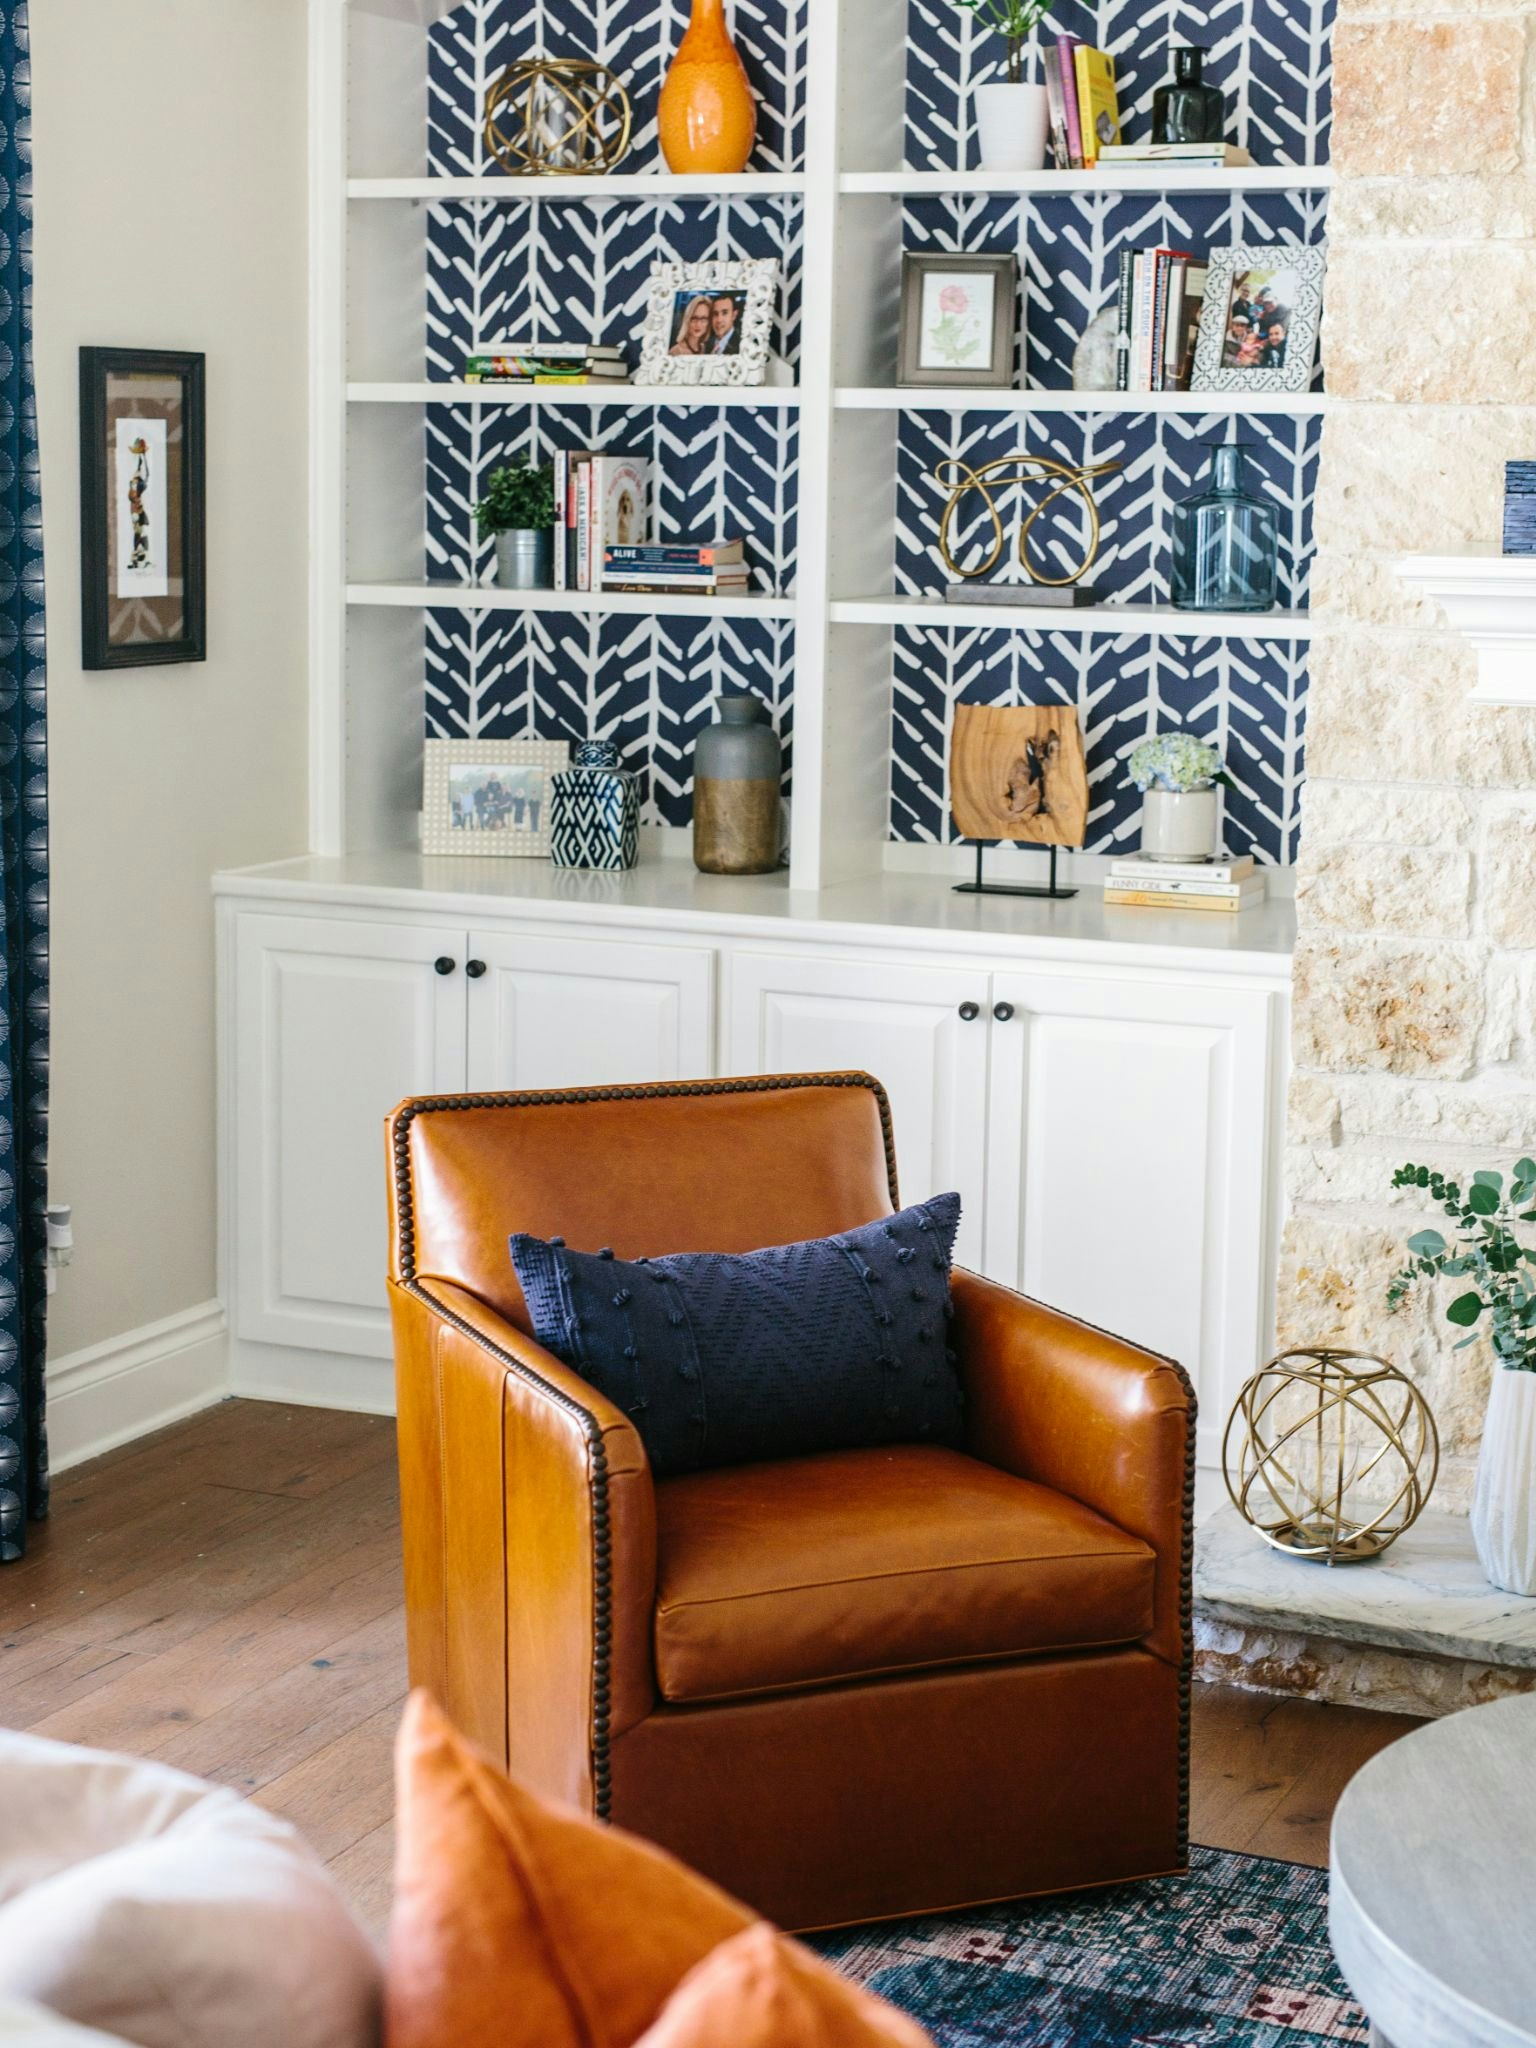 Wallpaper BuiltIns  Narrow Bedroom Layout Help  The DIY Playbook